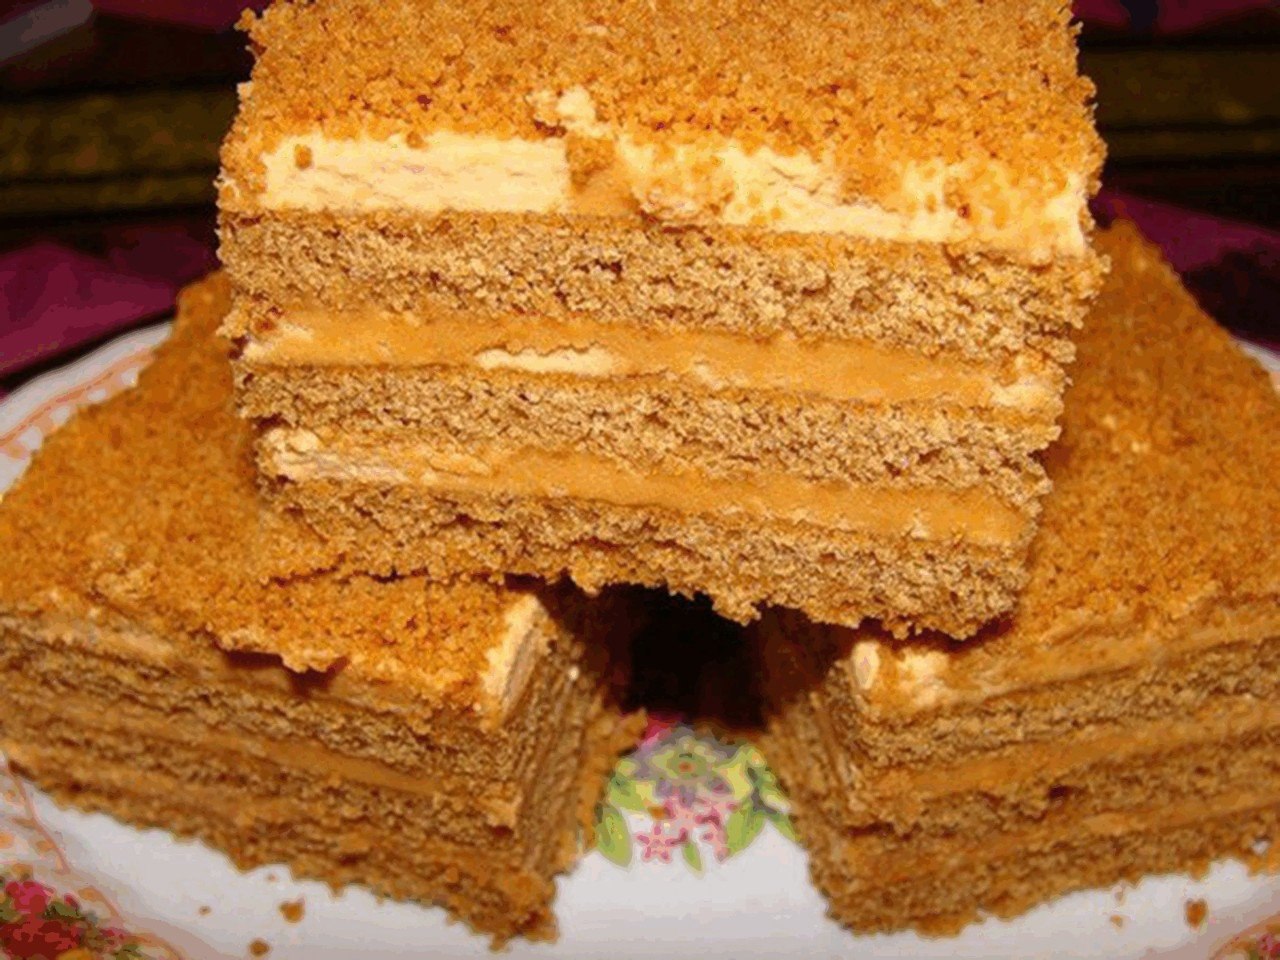 Рецепт торта медовик со сливками